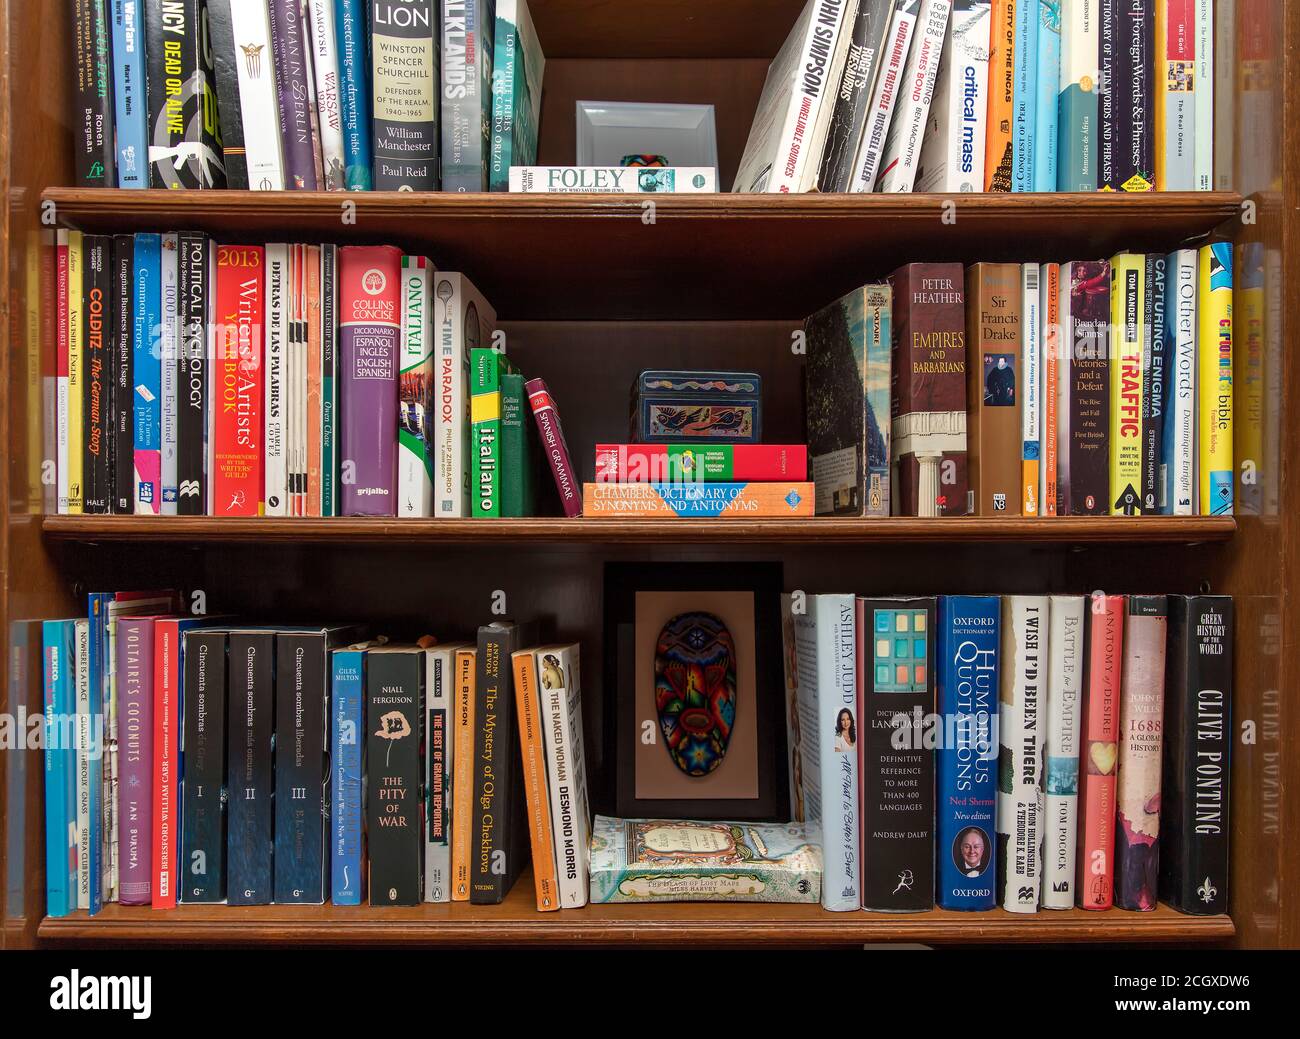 Home bookshelf with books Stock Photo